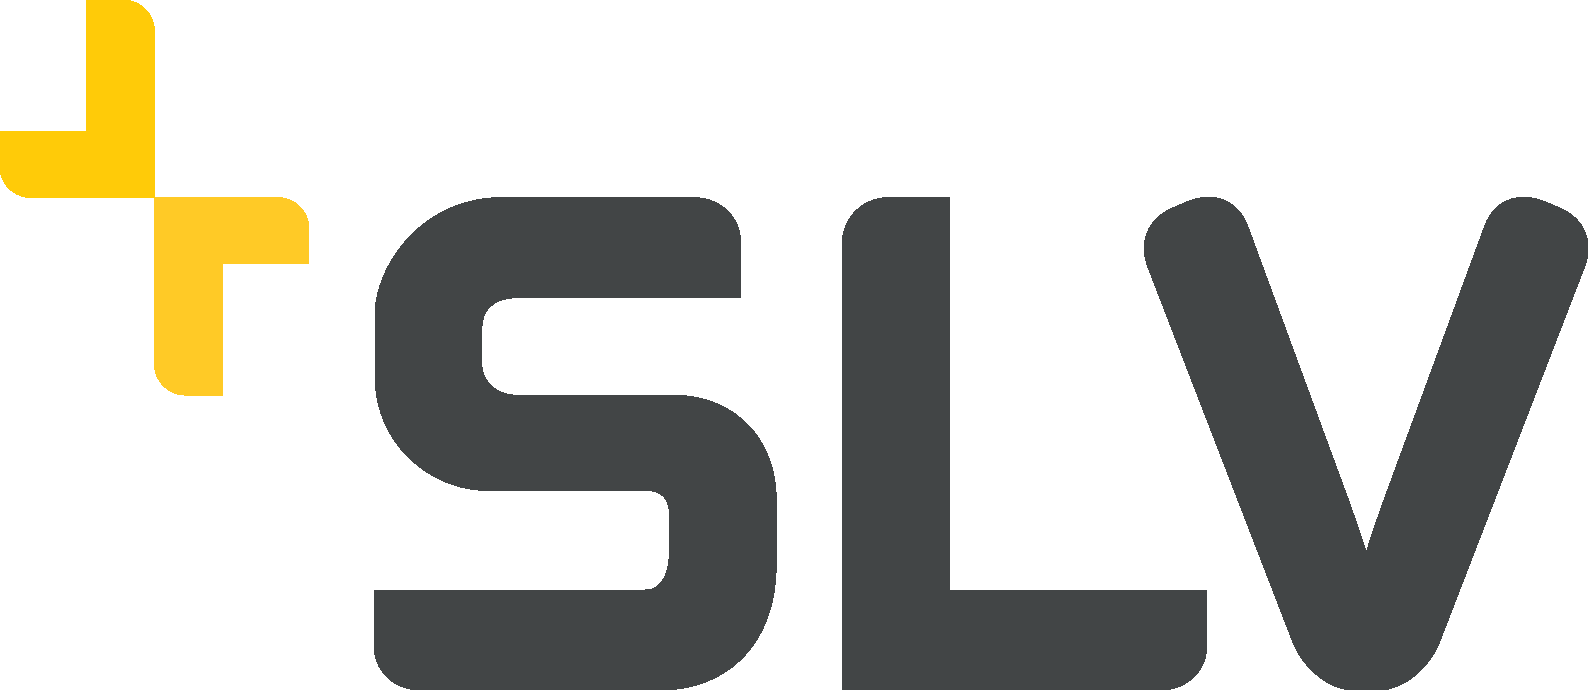 Логотип SLV (СЛВ)